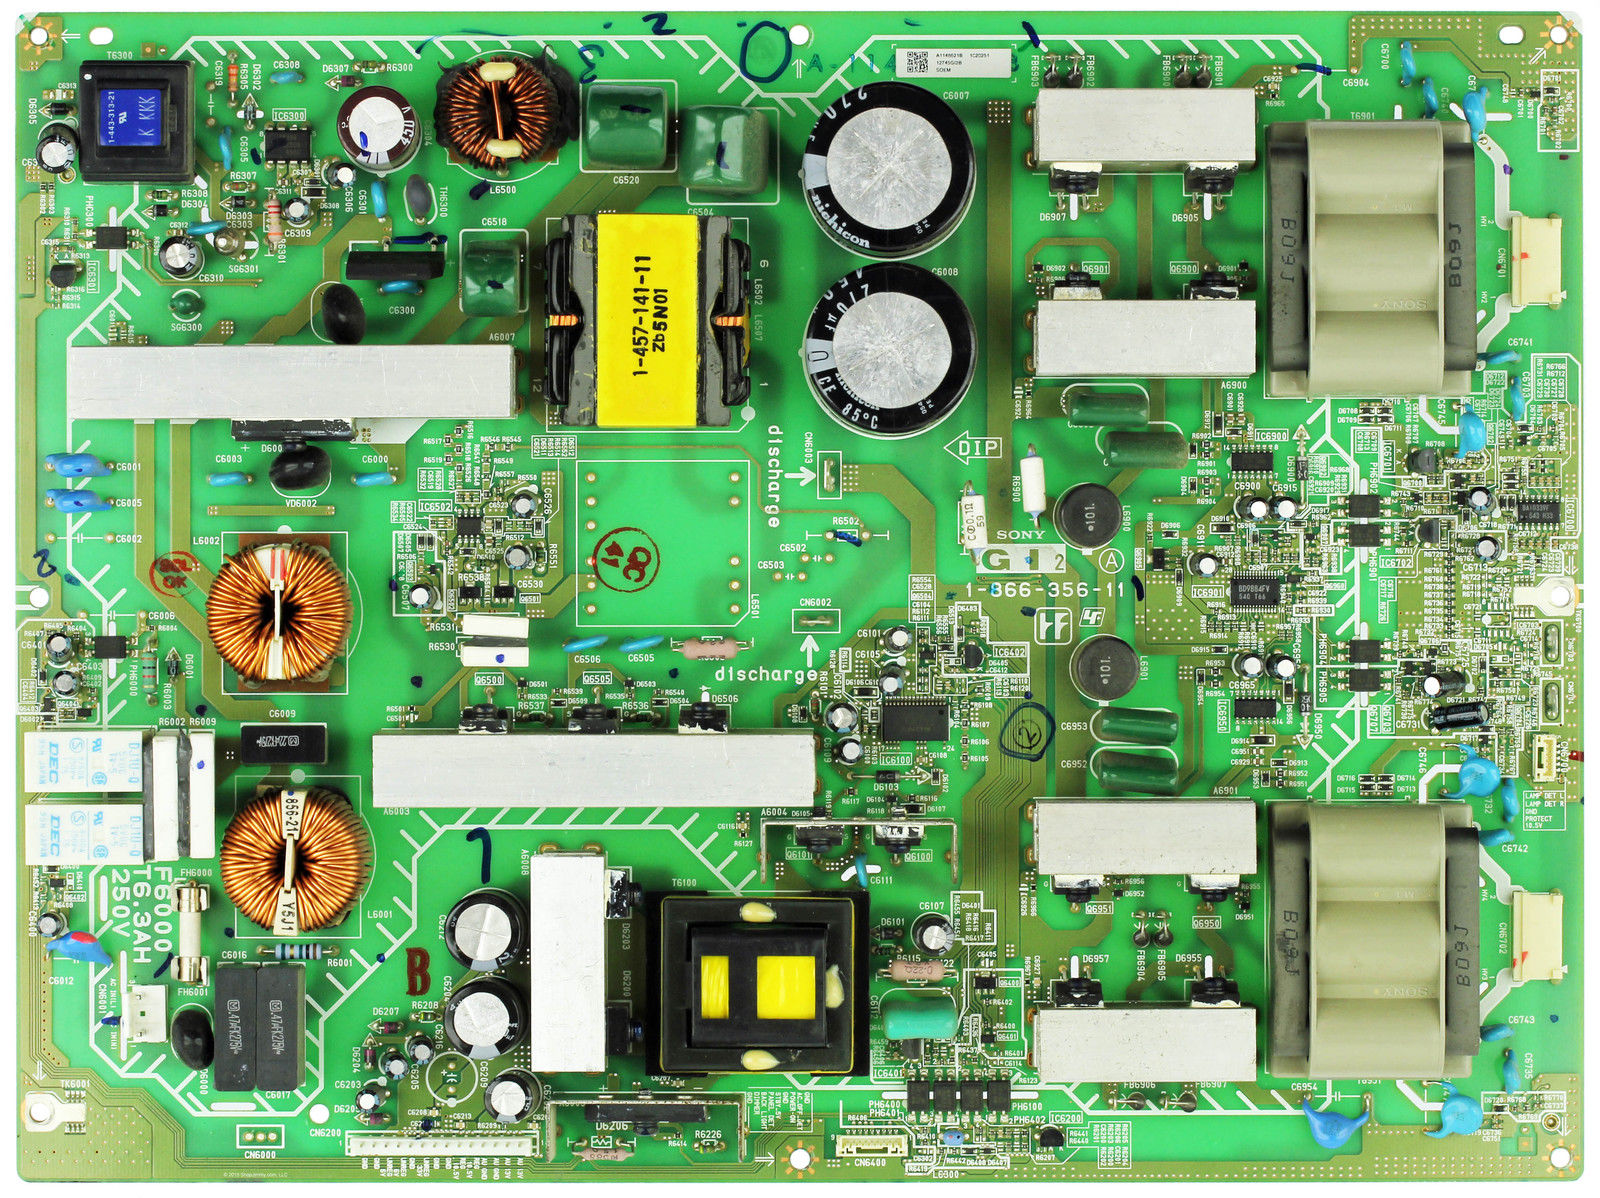 Sony (1-866-356-11) A-1148-621-B GI2 Board for KDL-V40XBR1